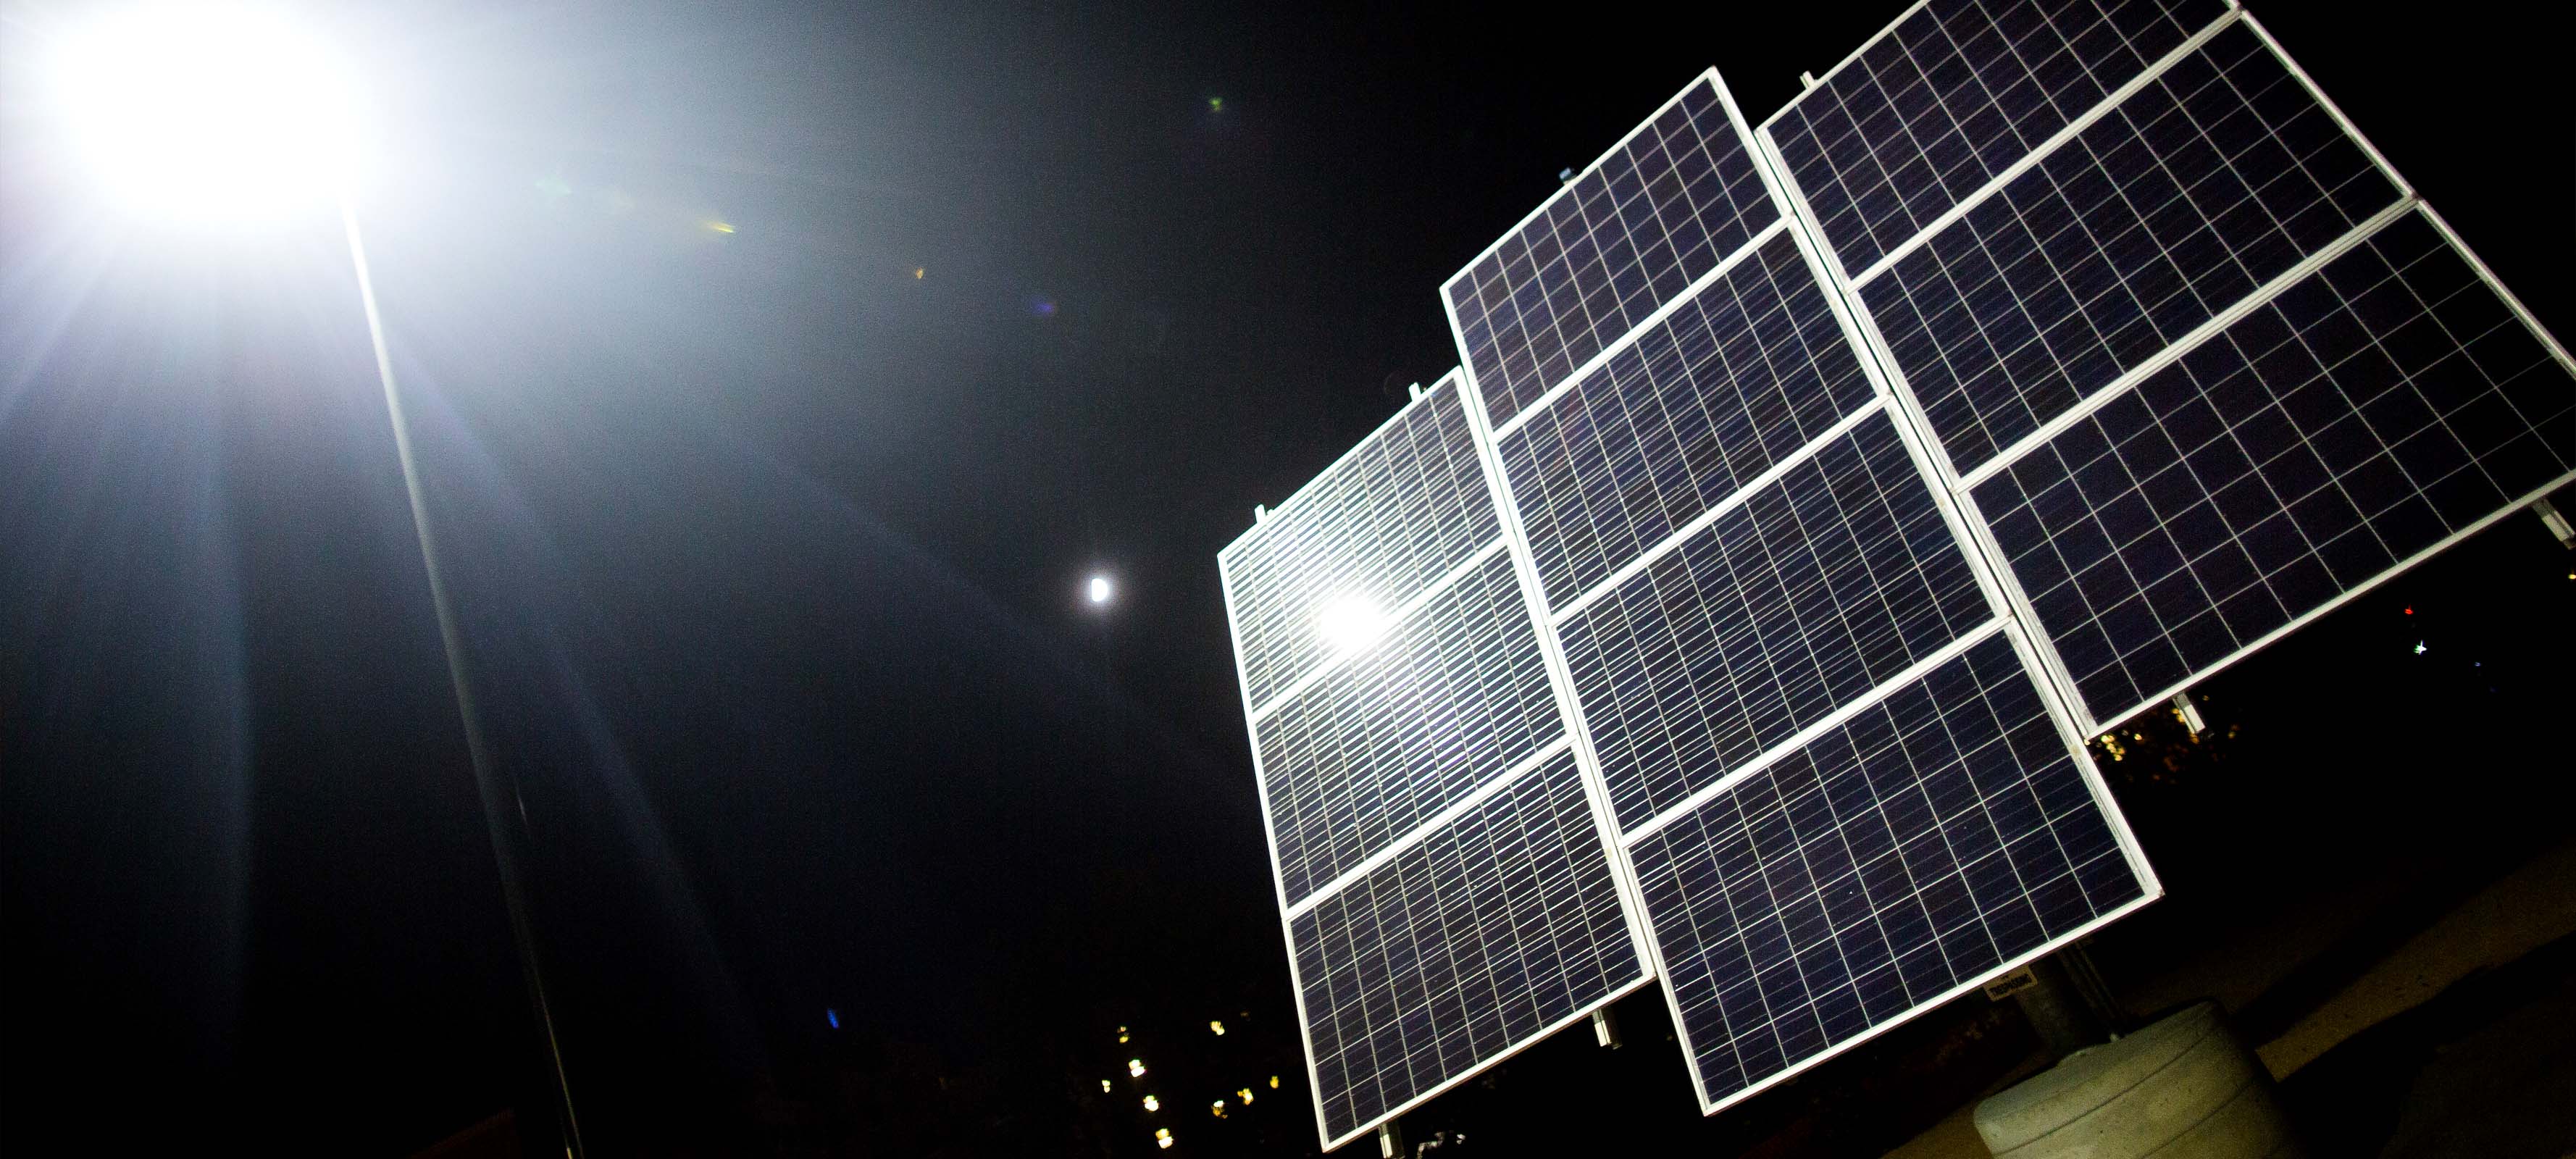 A solar panel illuminated at night.